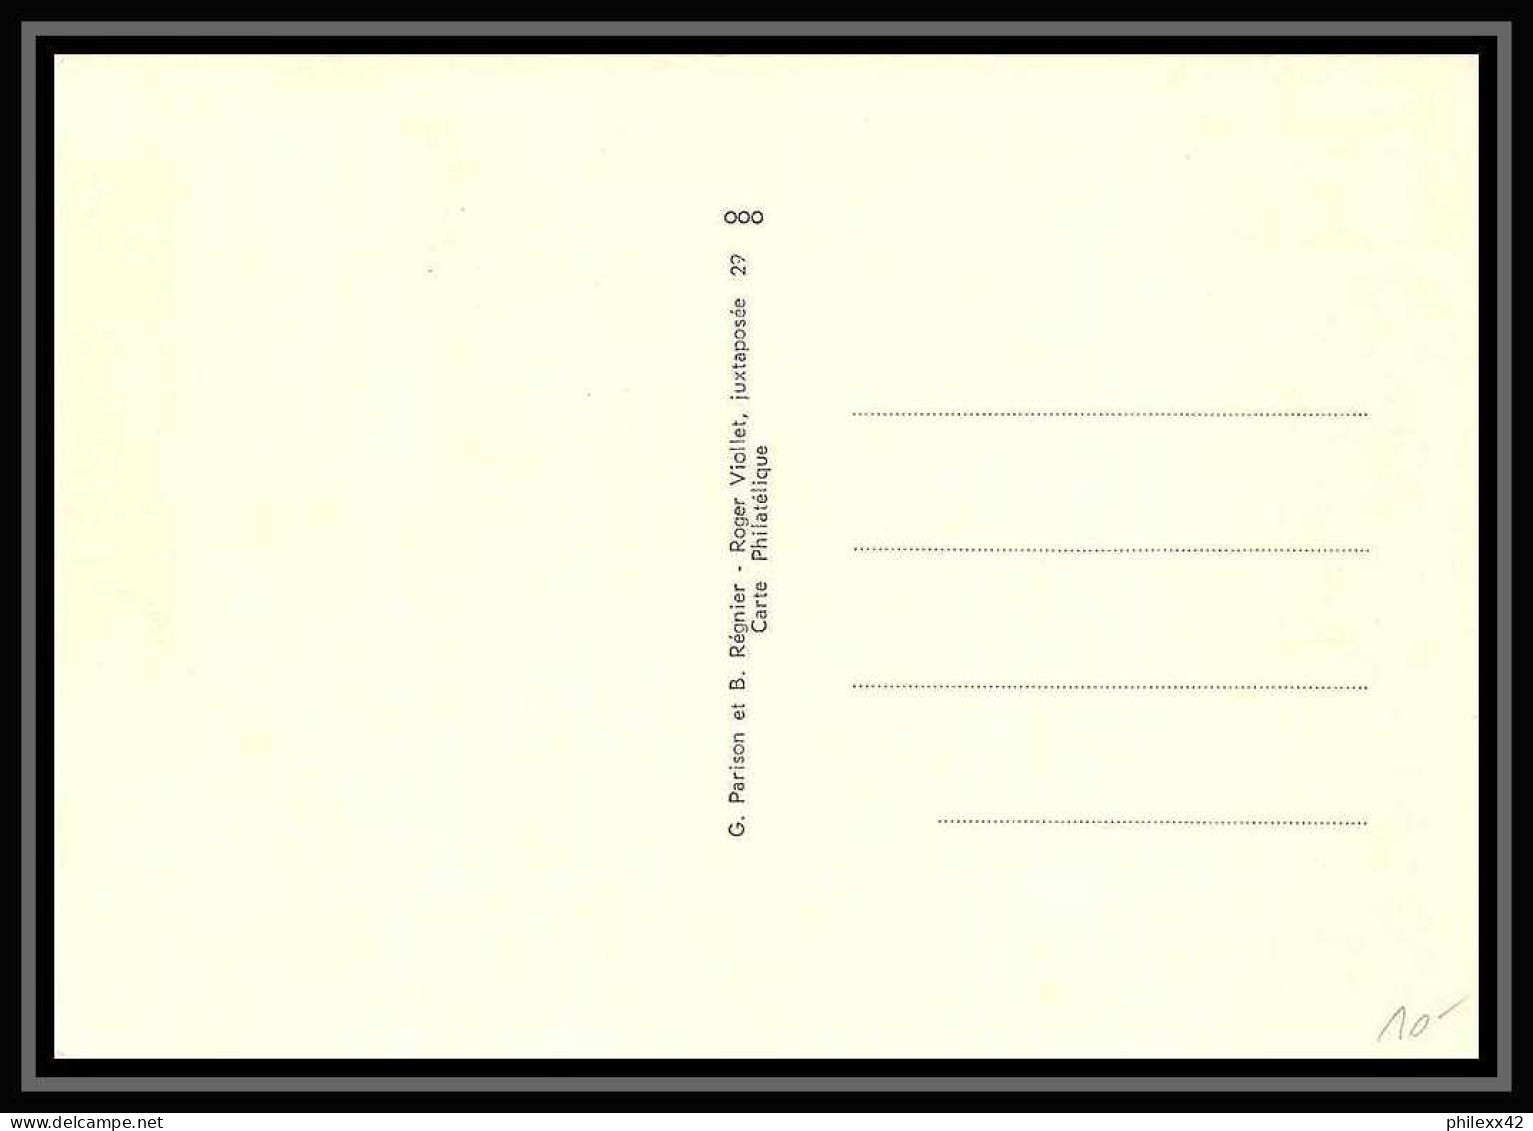 2360/ Carte Maximum France N°1600 Organisation Internationale Du Travail OIT ALBERT THOMAS Edition Parison 1969 - OIT